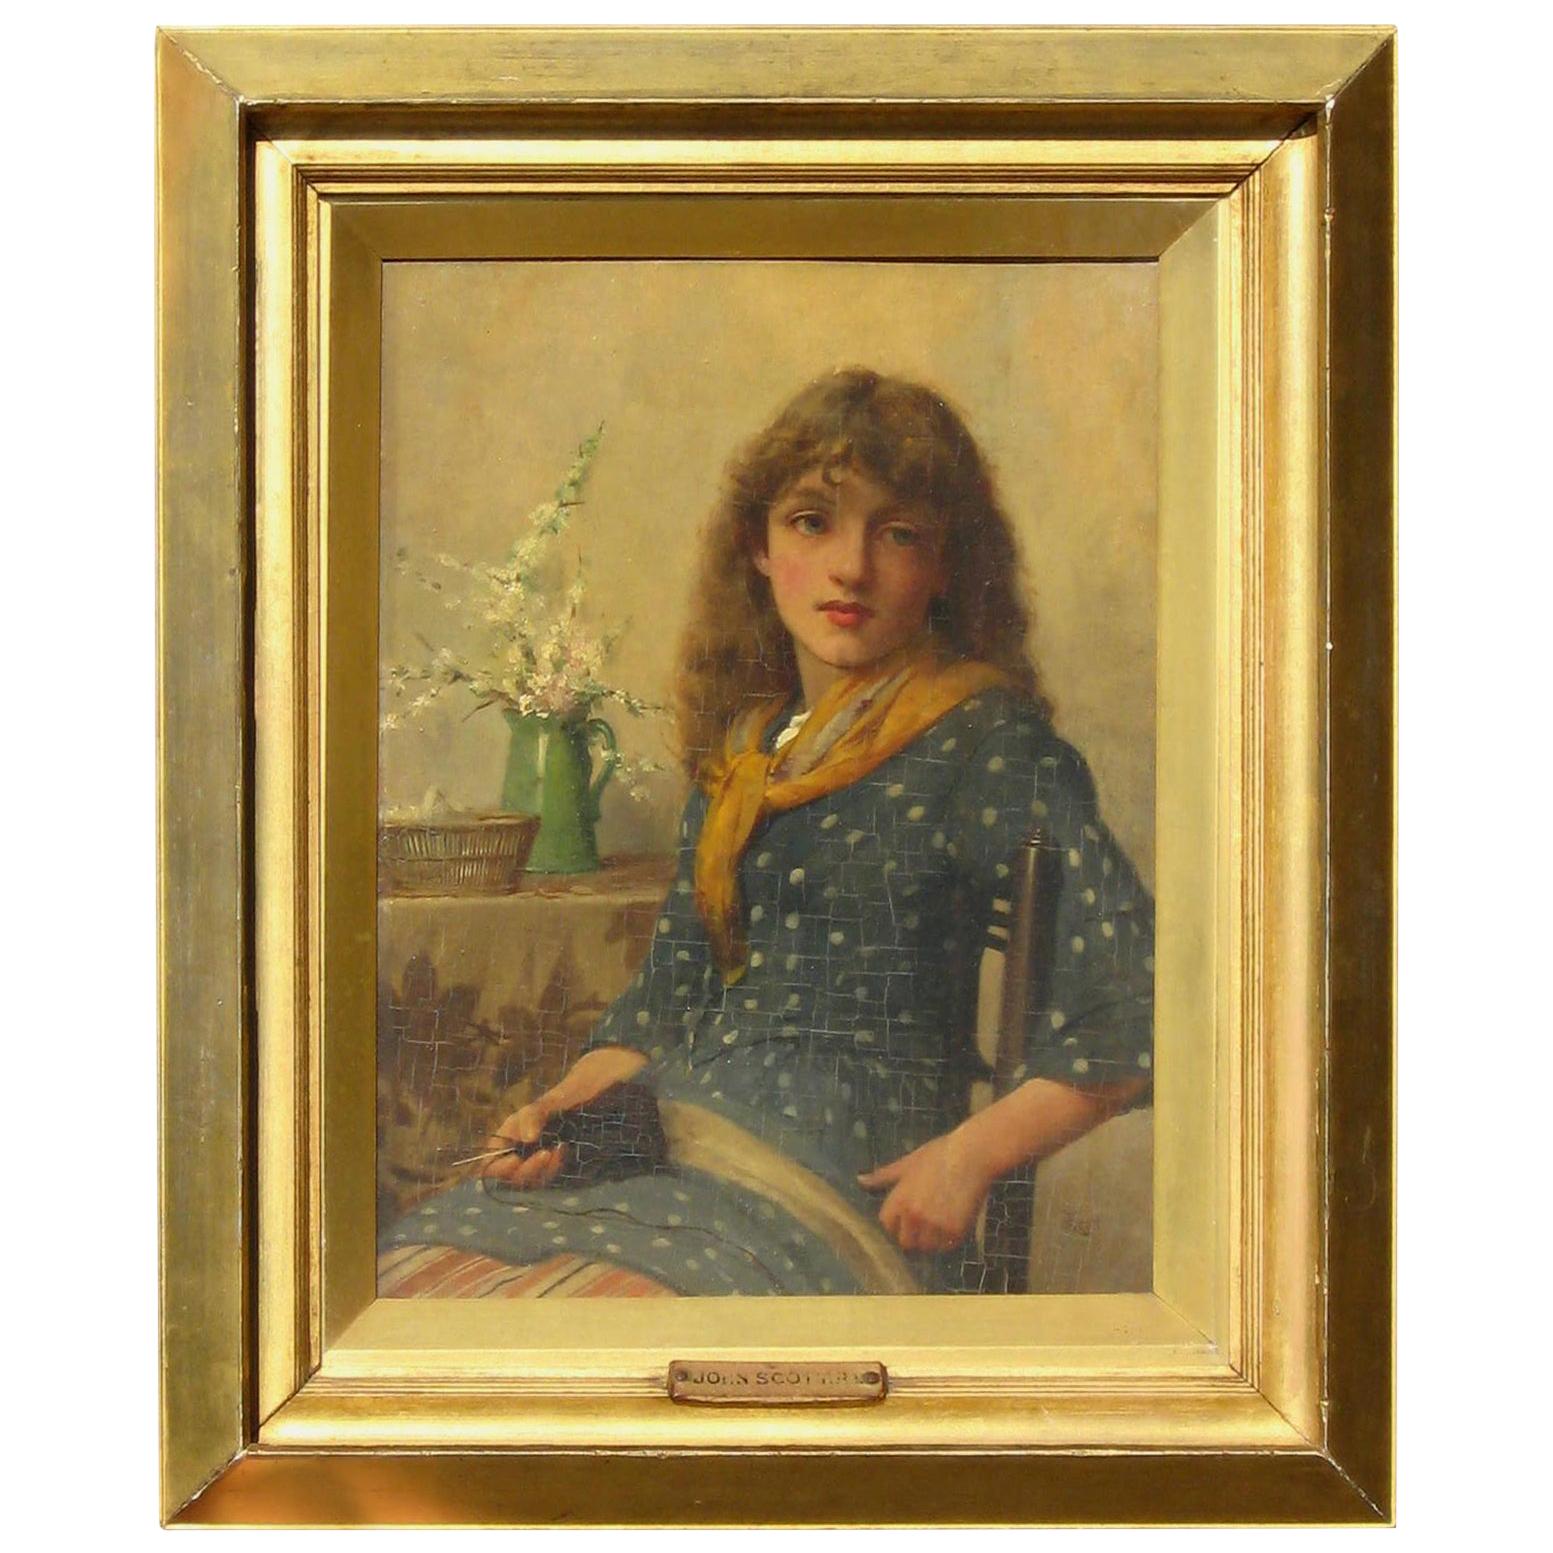 John Scott British Artist Oil on Board, Young Seamstress